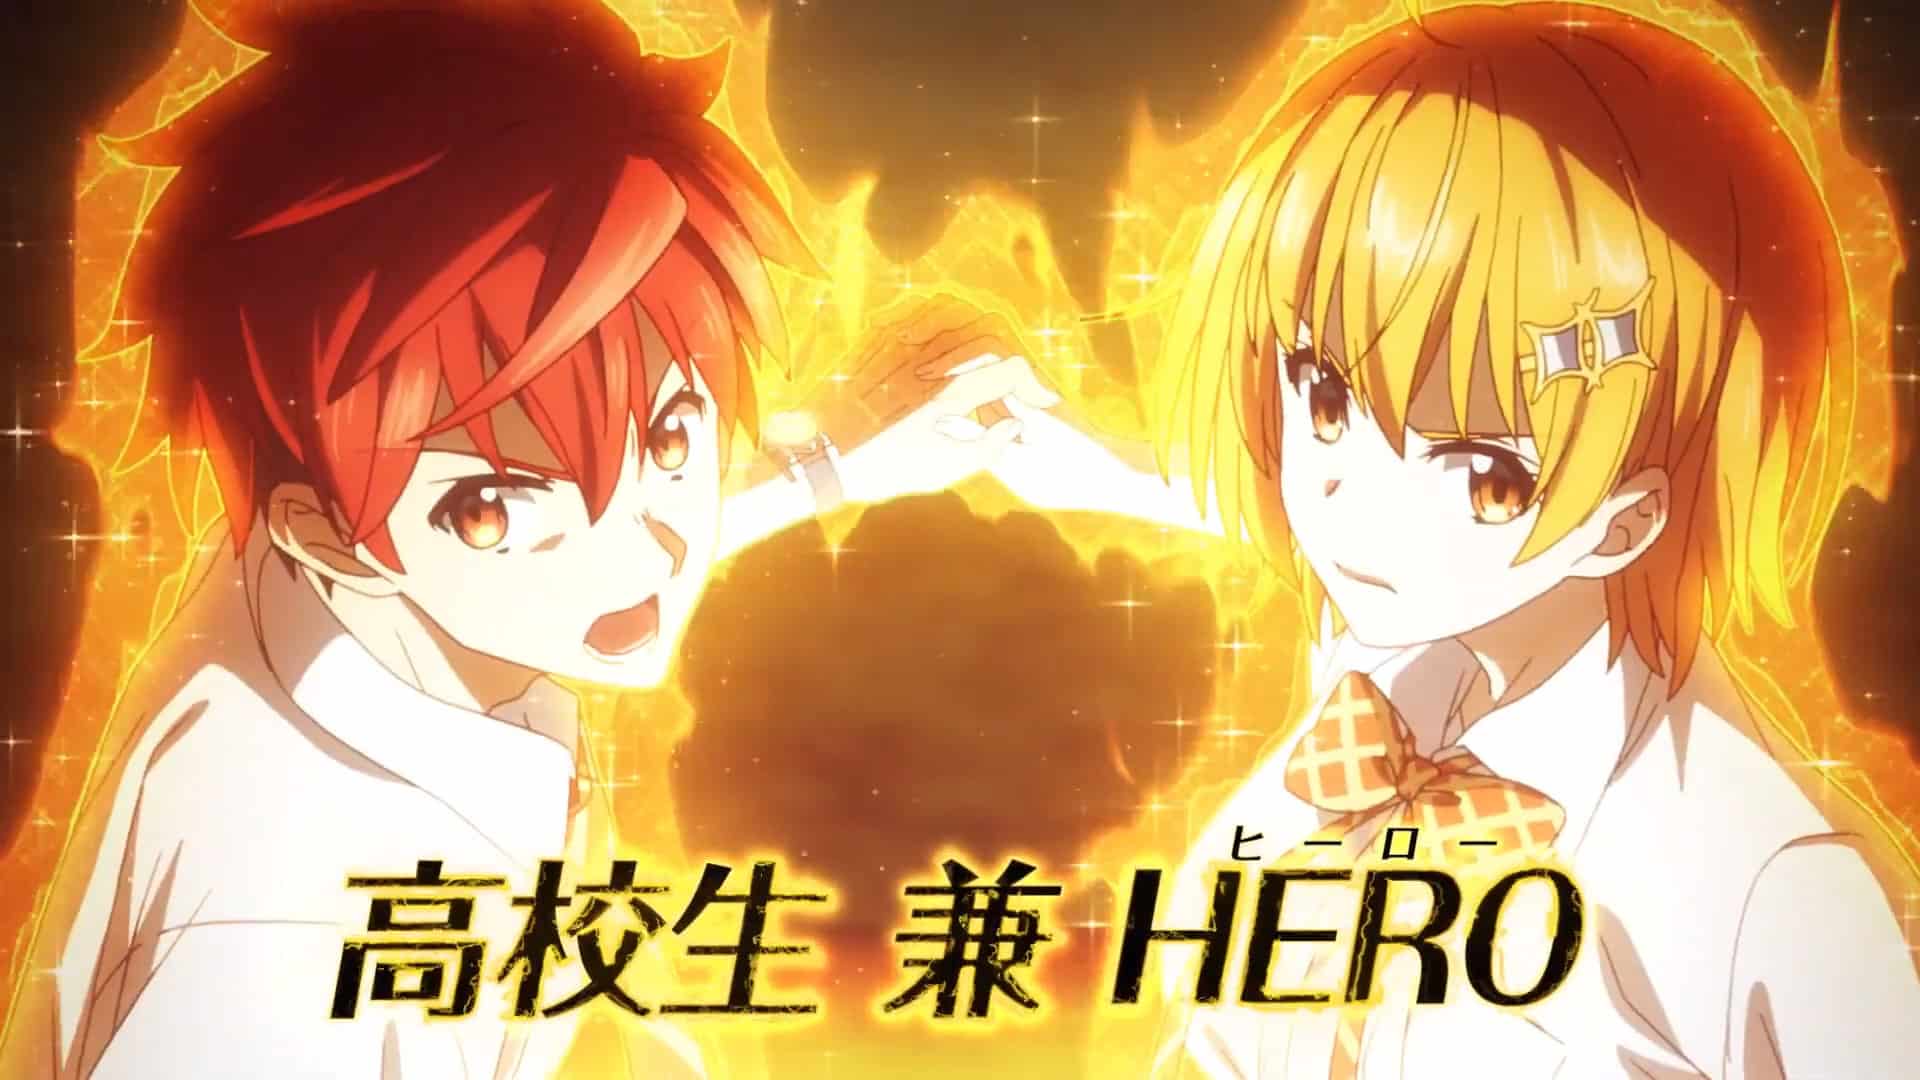 Présentation de l'anime Dokyuu Hentai HxEros en teaser vidéo